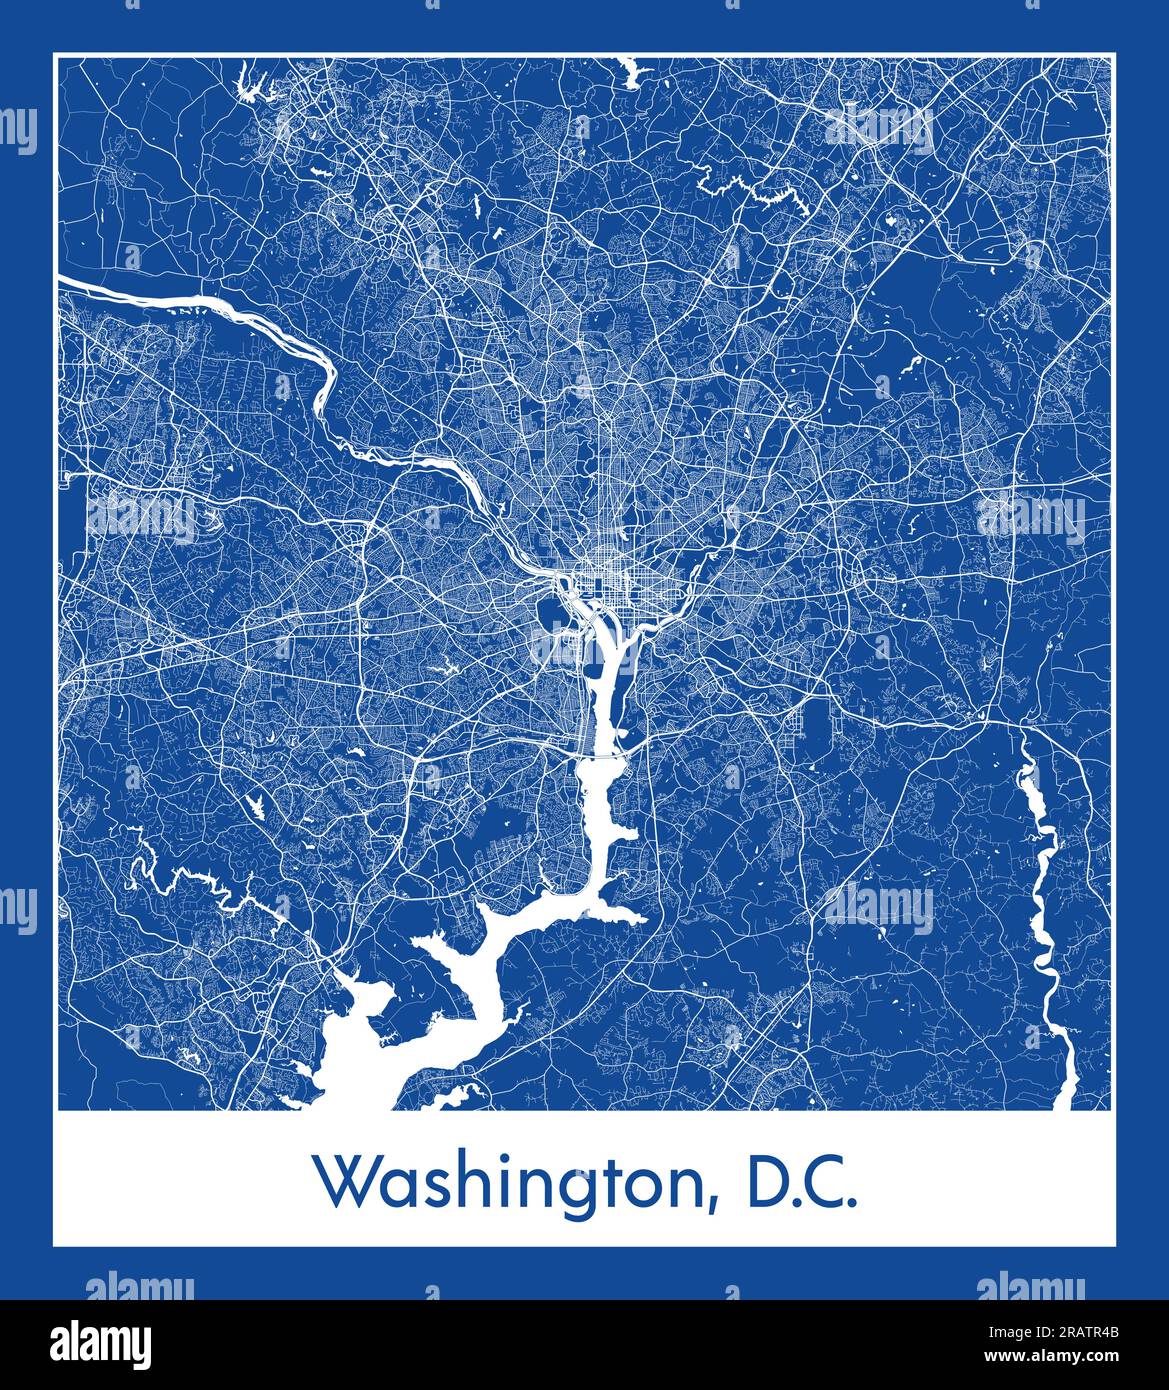 Washington D.C., USA Nordamerika-Stadt Karte blau gedruckt Vektordarstellung Stock Vektor